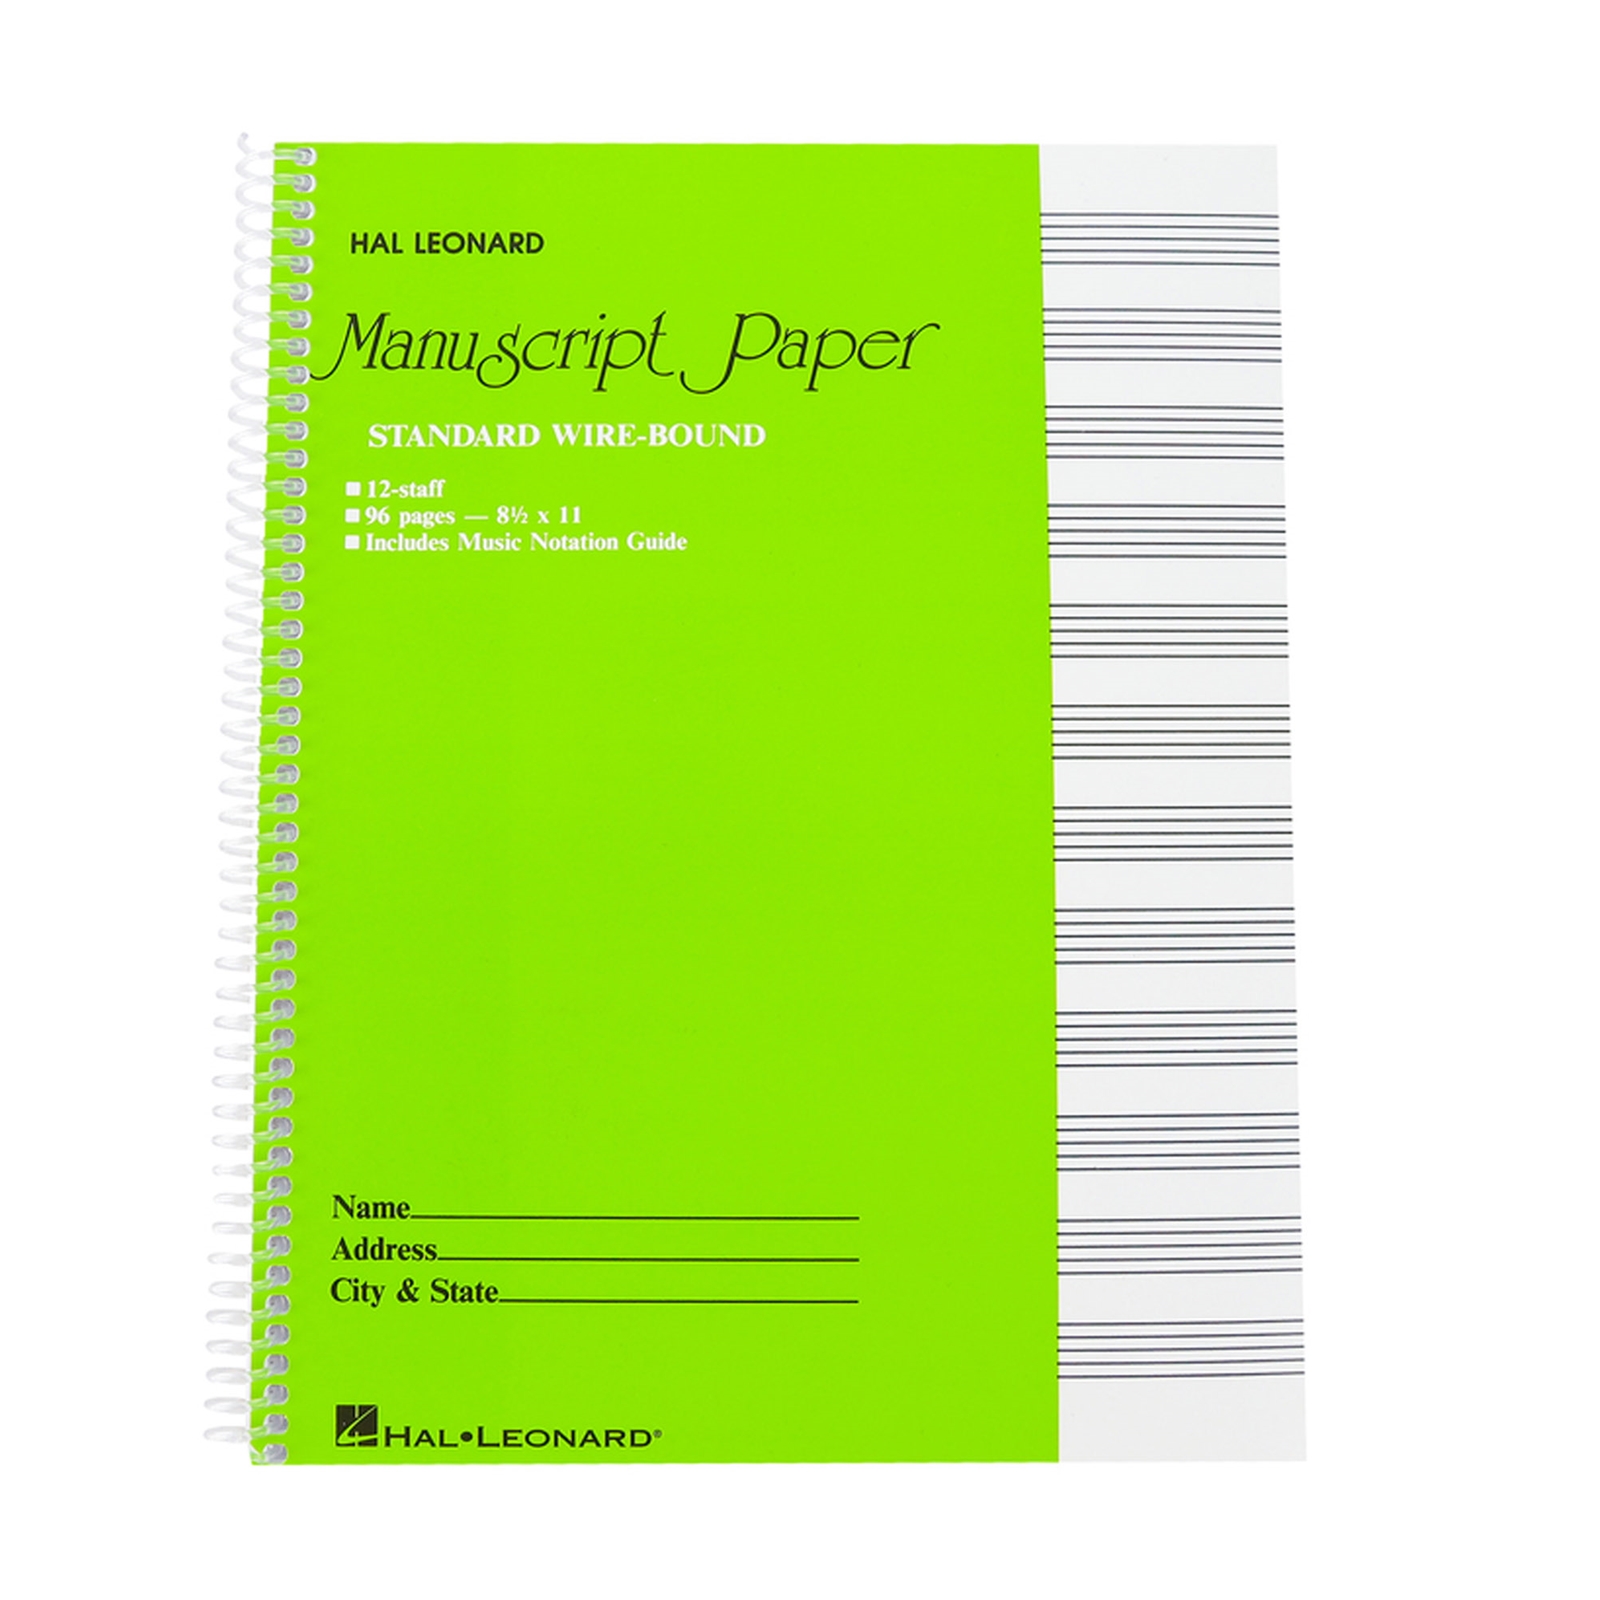 Hal-Leonard Standard Wire-Bound Manuscripte Paper